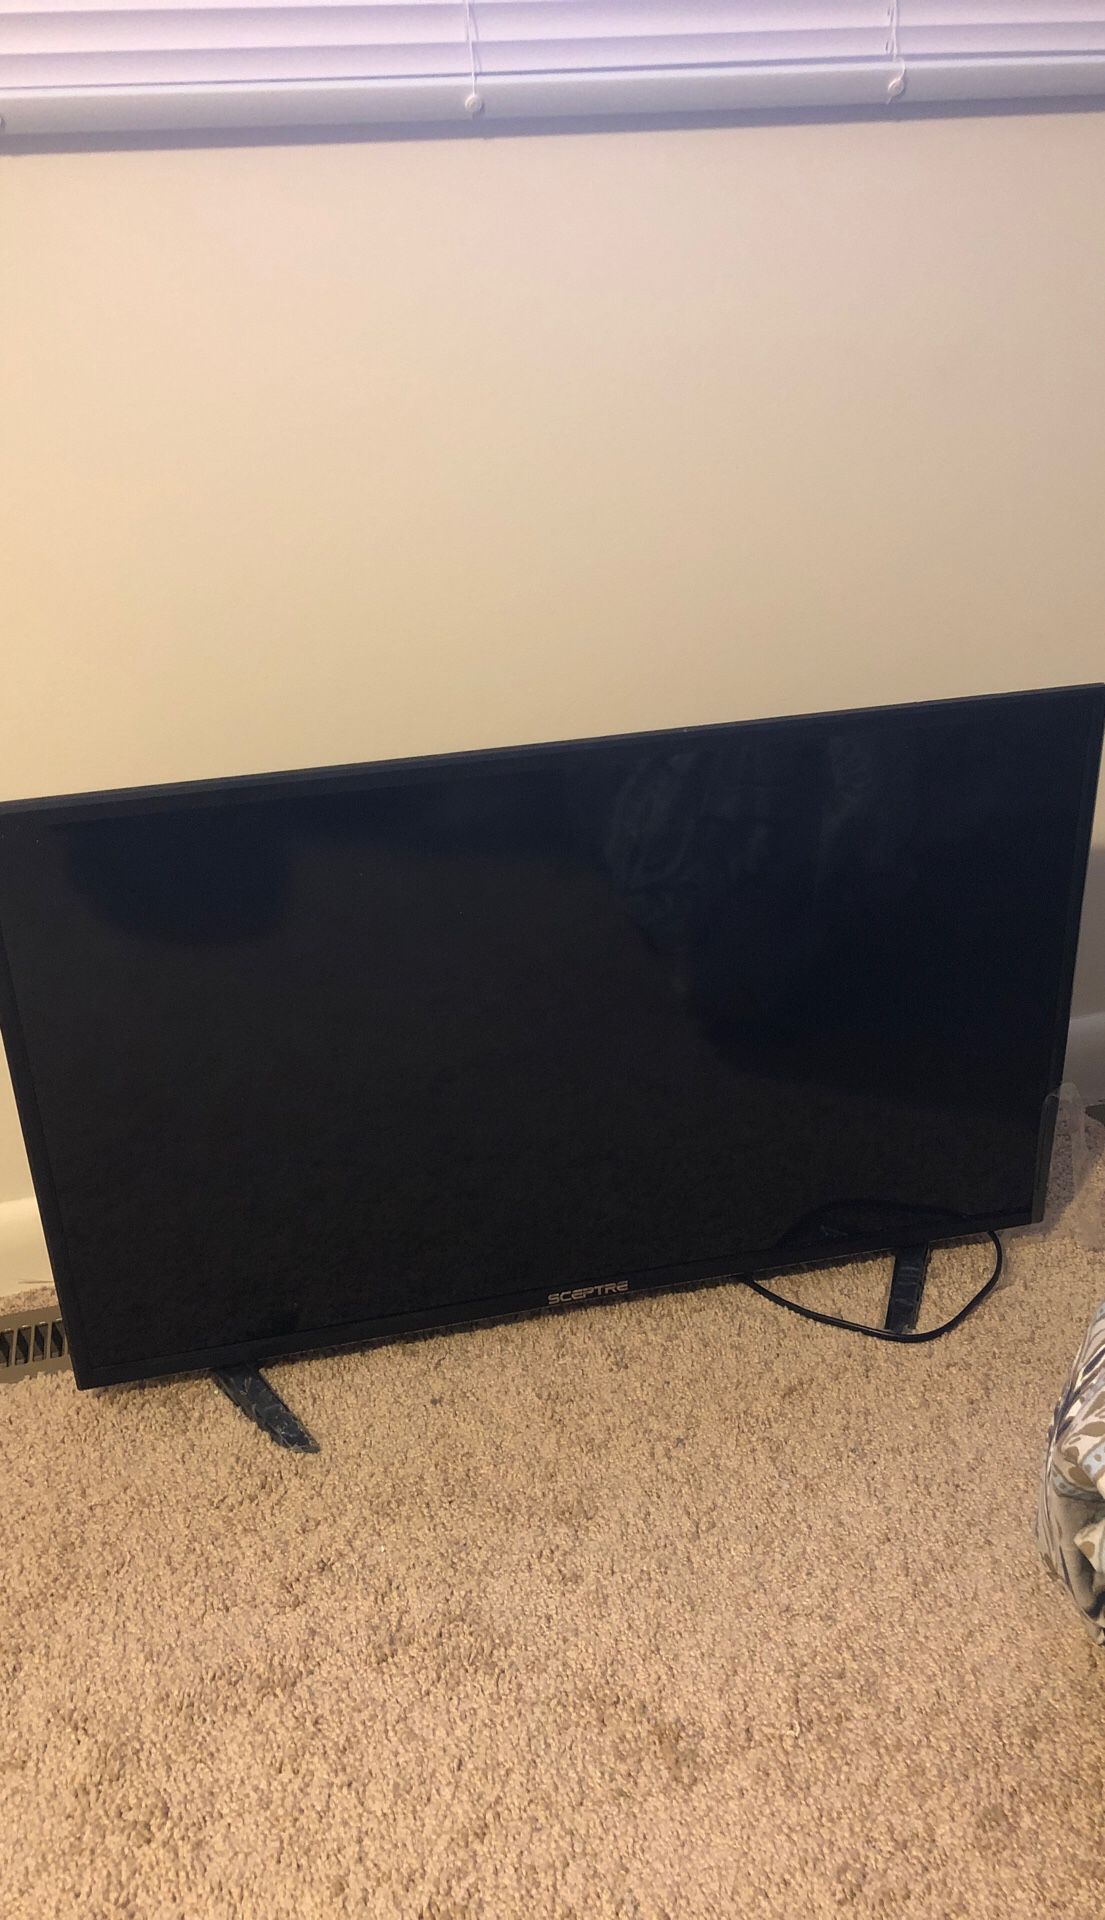 New unused 32 inch TV